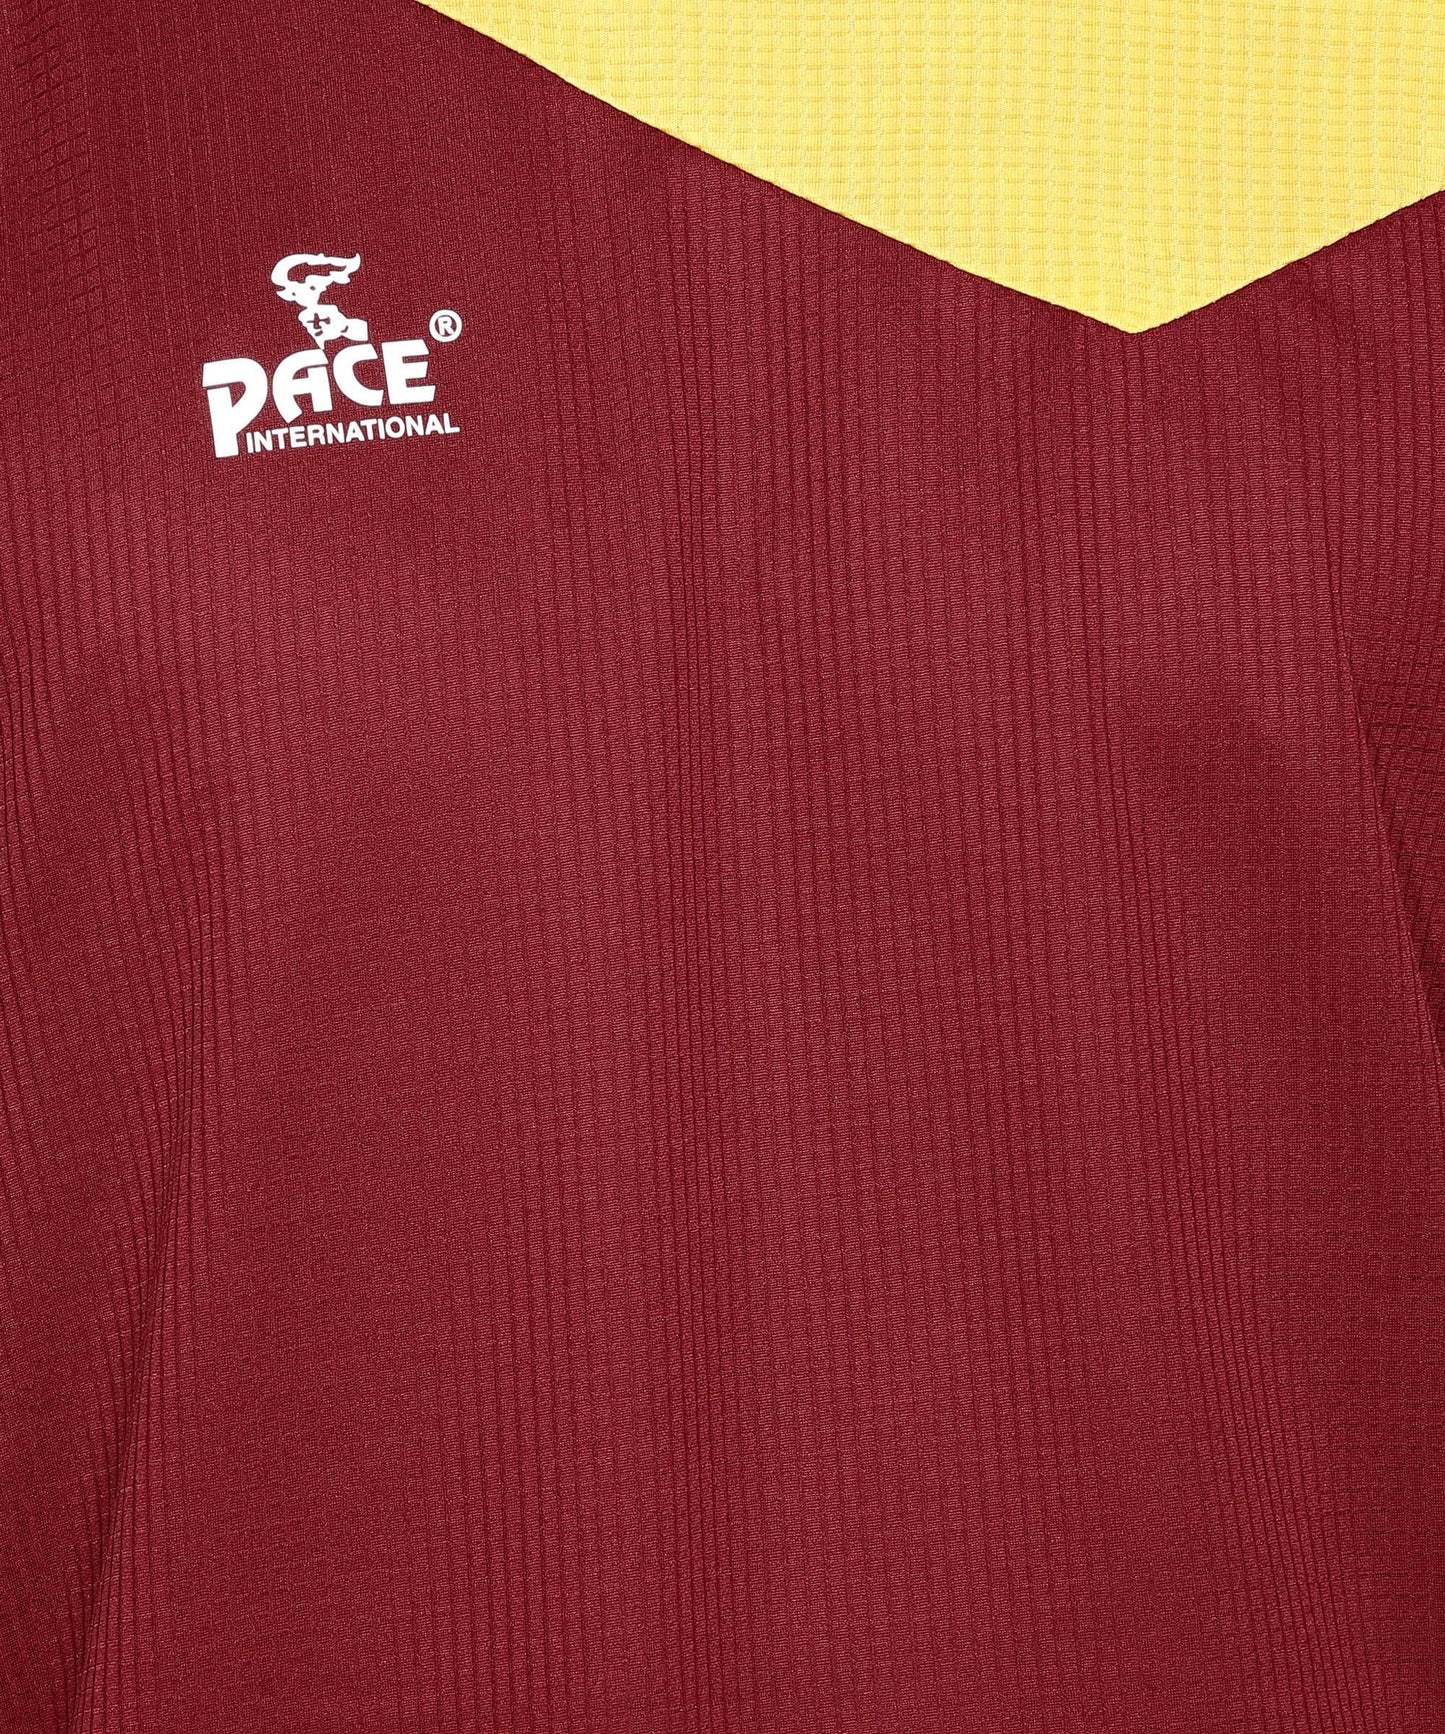 Pace International Men Football Jersey and Short (Maroon/ Yellow)